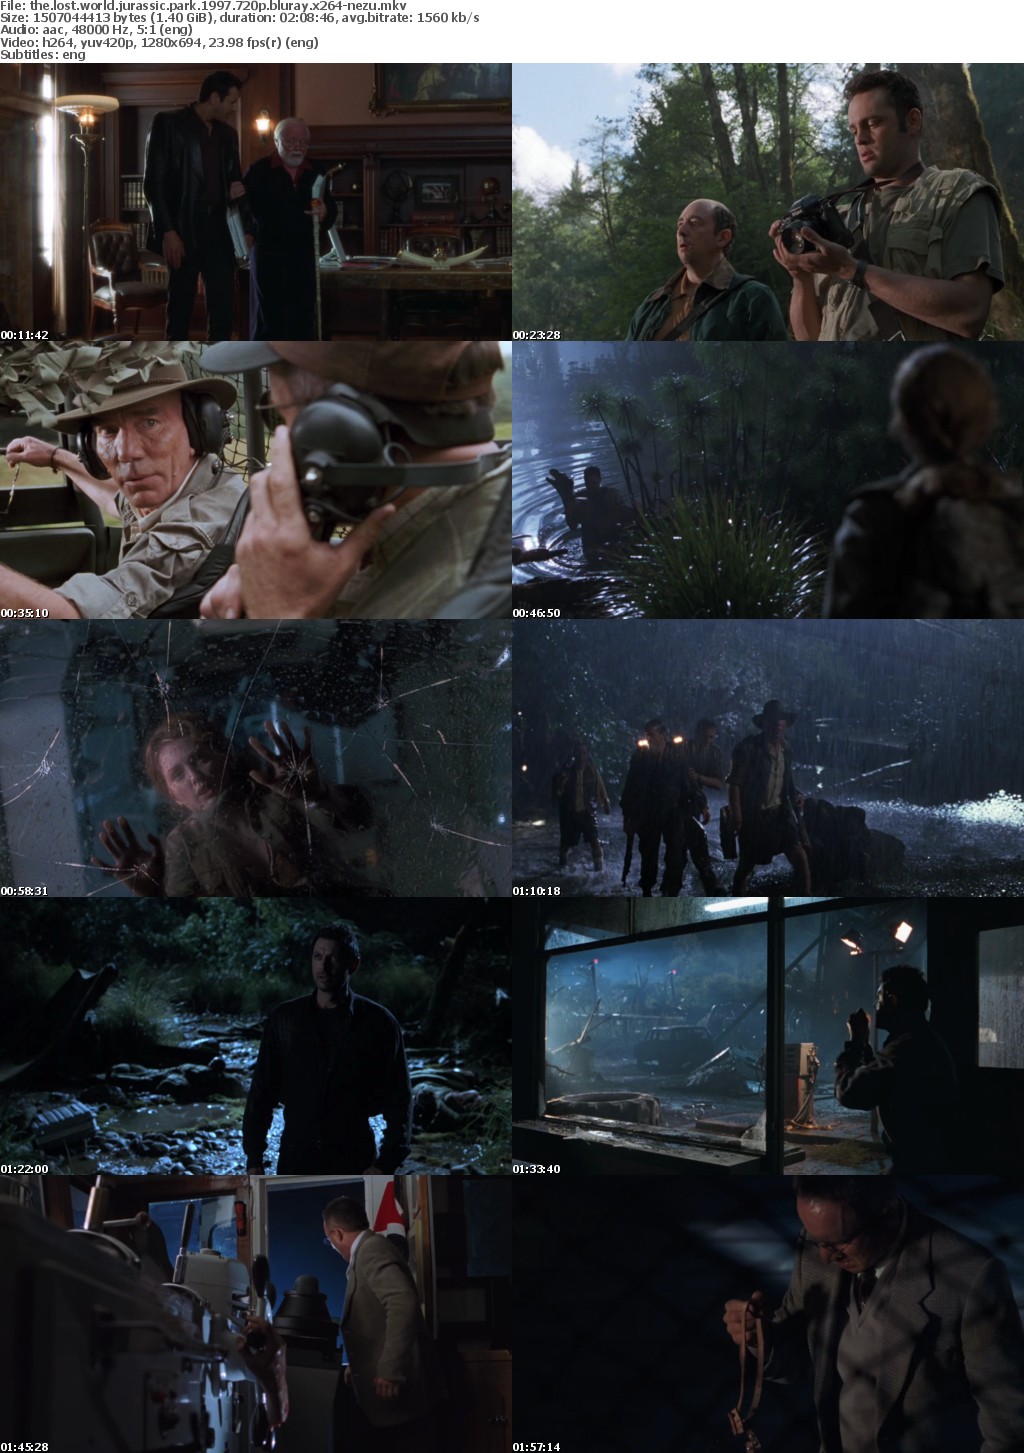 The Lost World Jurassic Park 1997 720p BluRay x264-NeZu